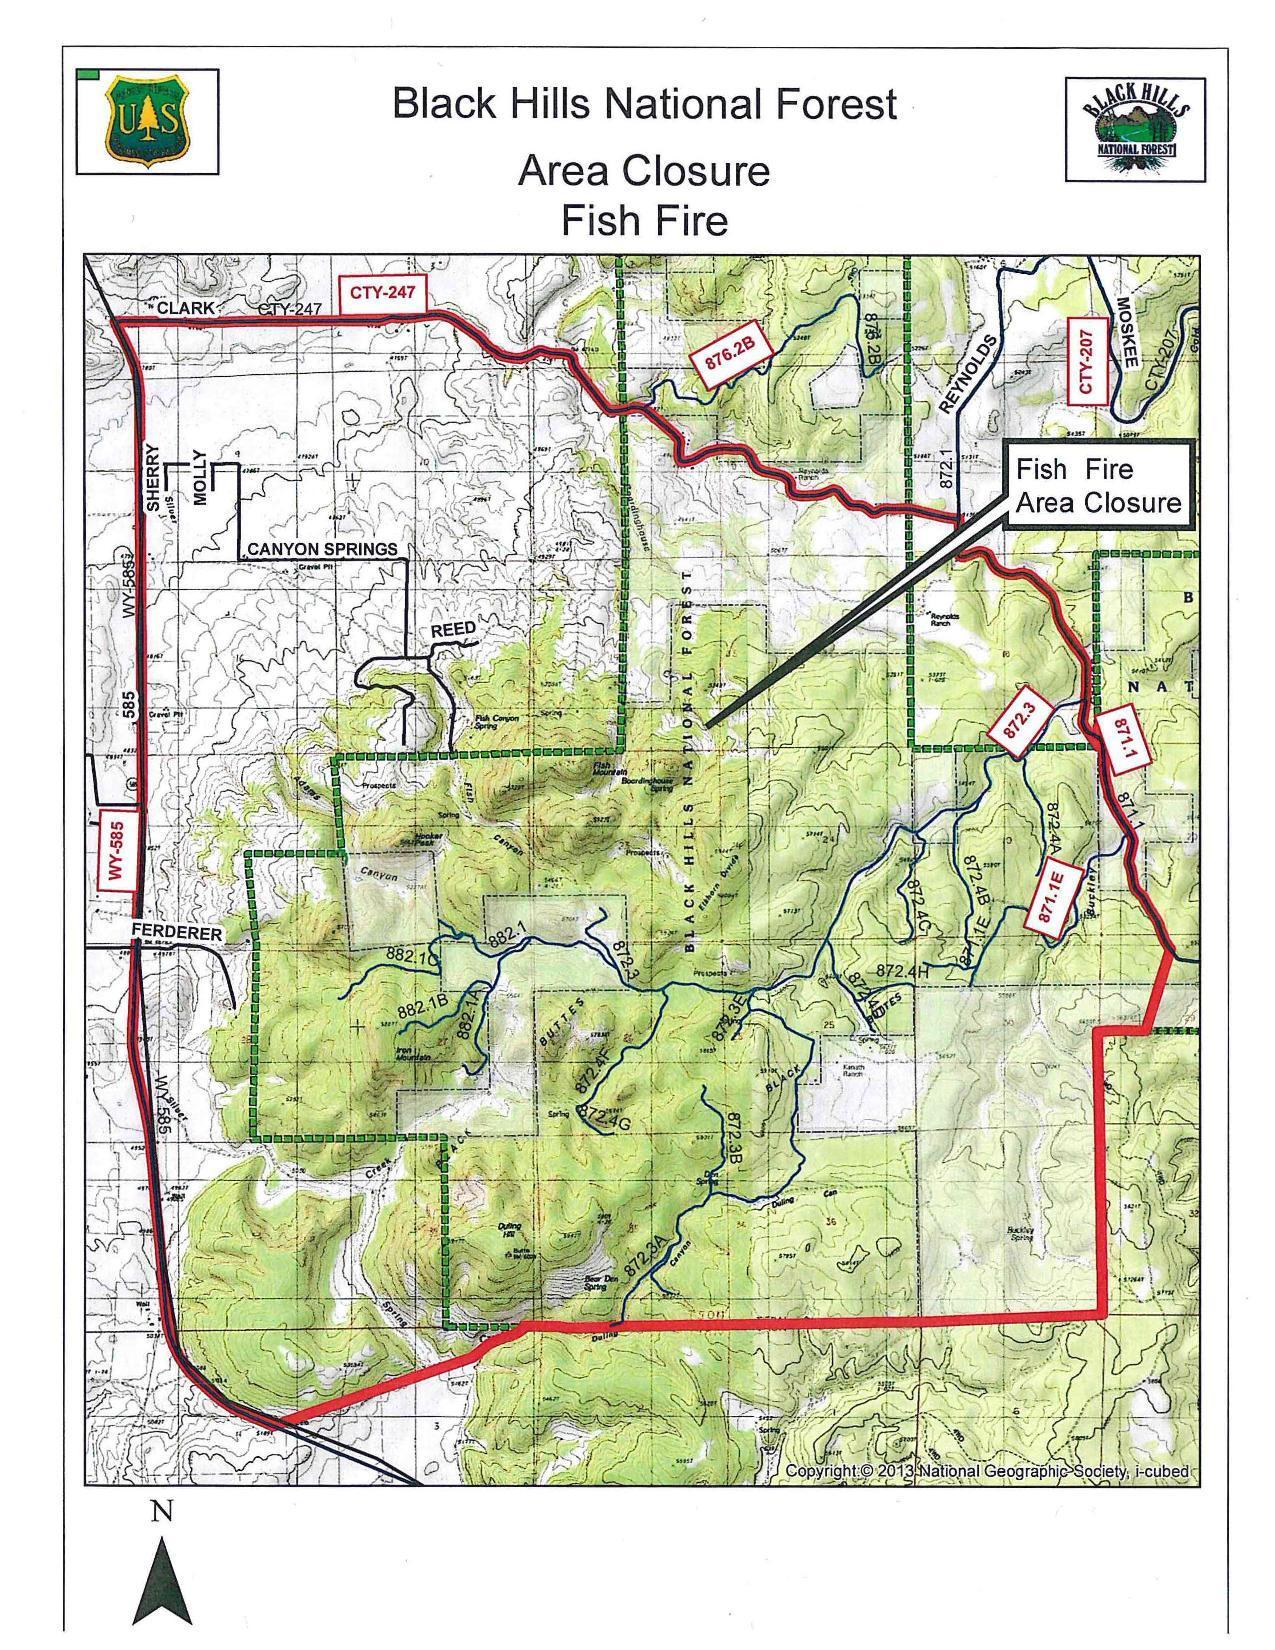 Fish Fire Area Closure, Black Hills NF